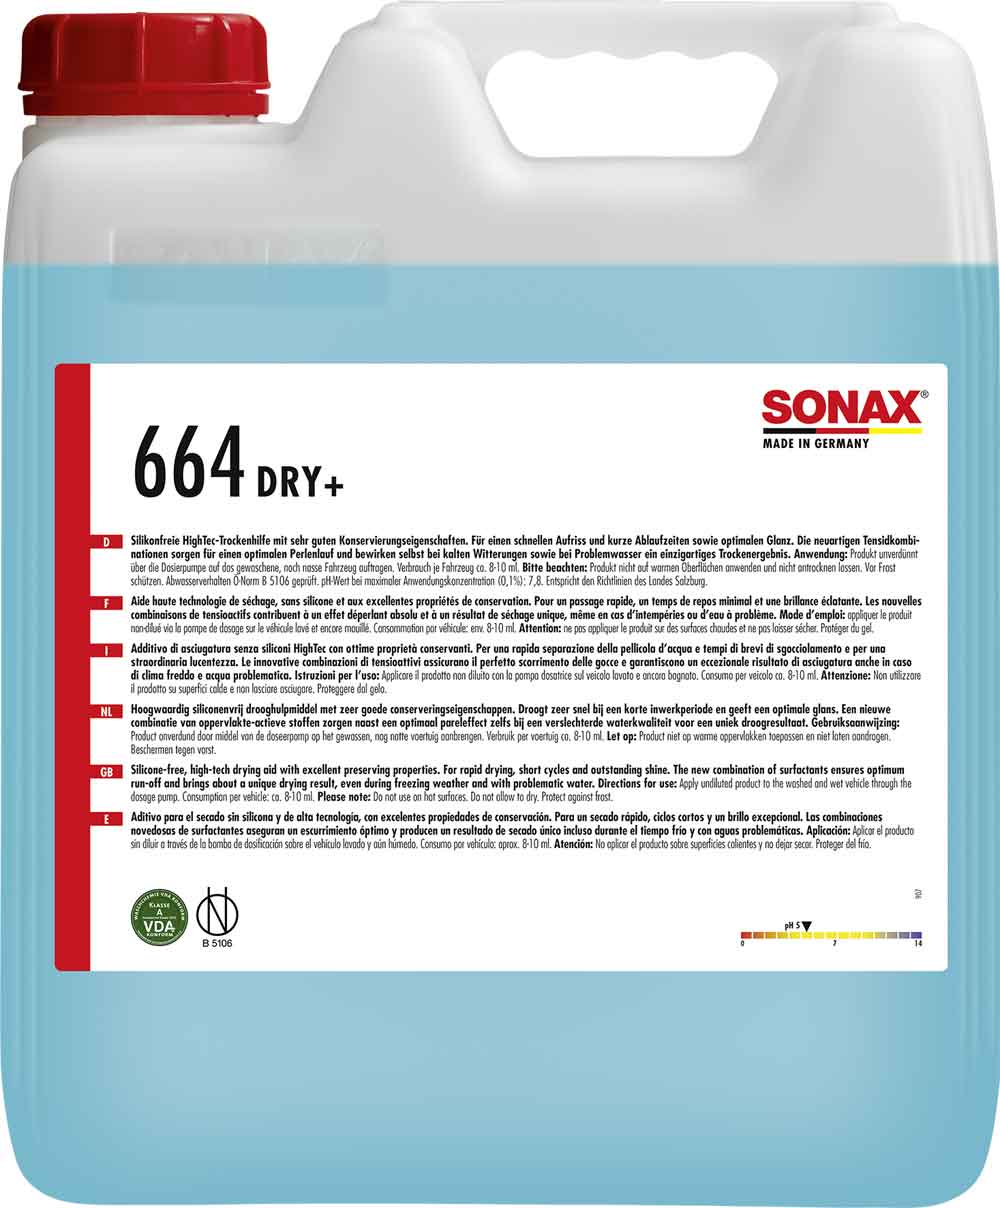 SONAX DRY+ Glanztrockner 10L